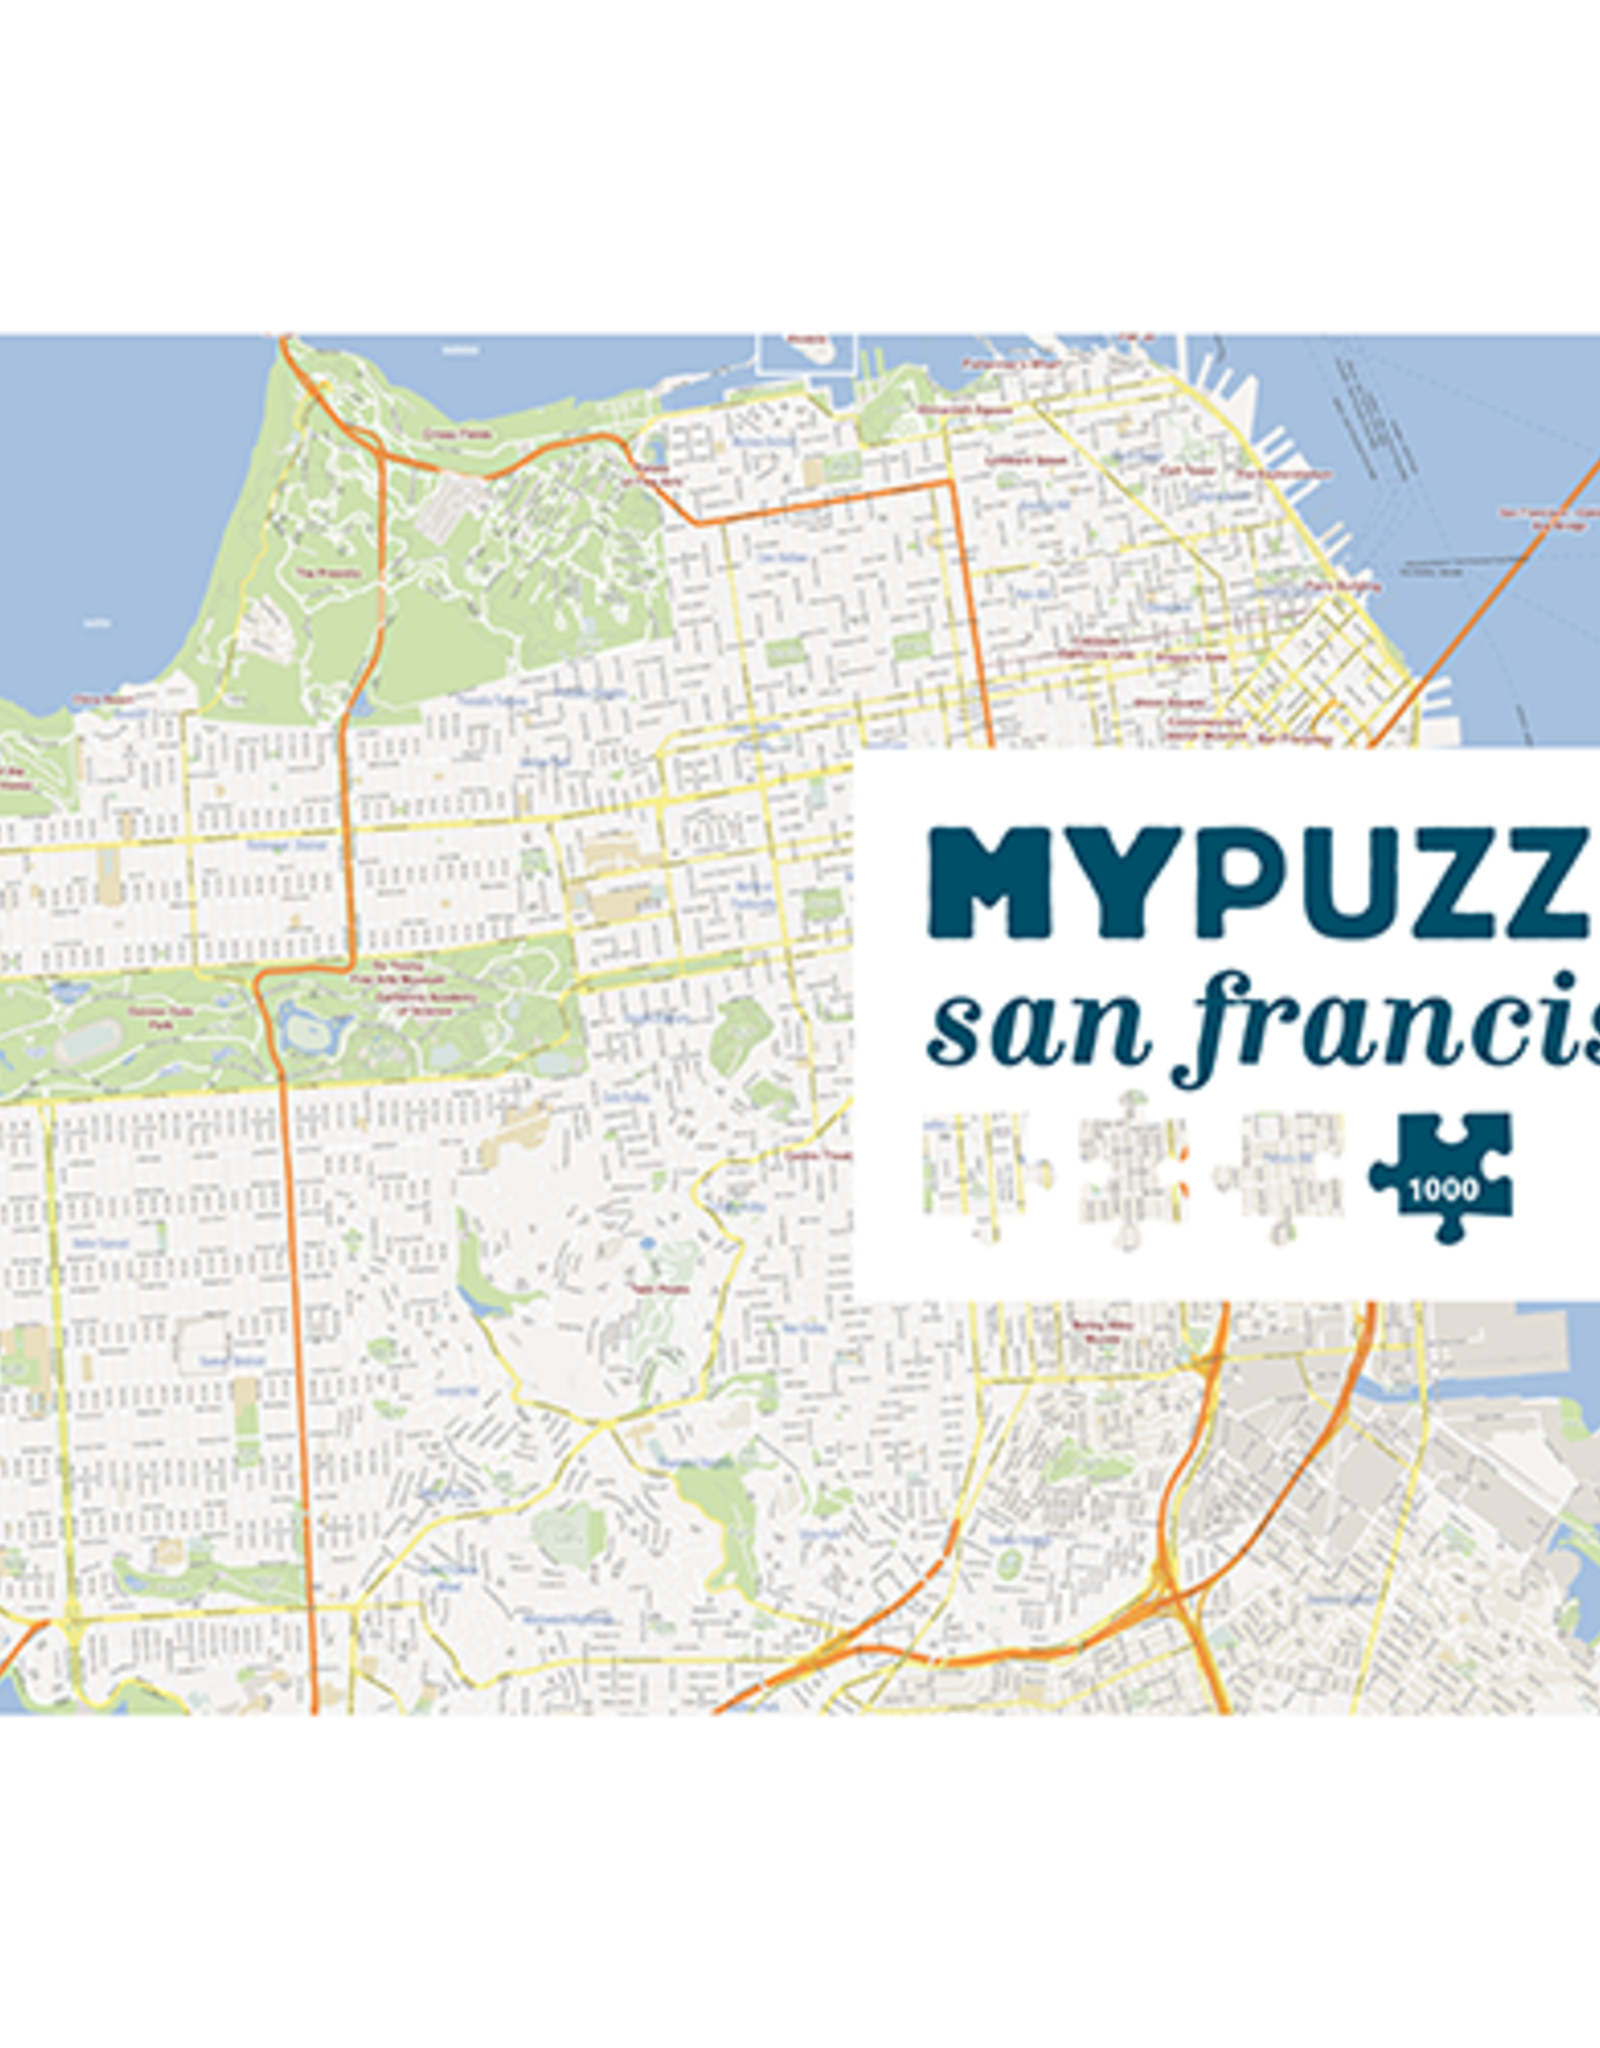 Helvetiq Mypuzzle: San Fransisco